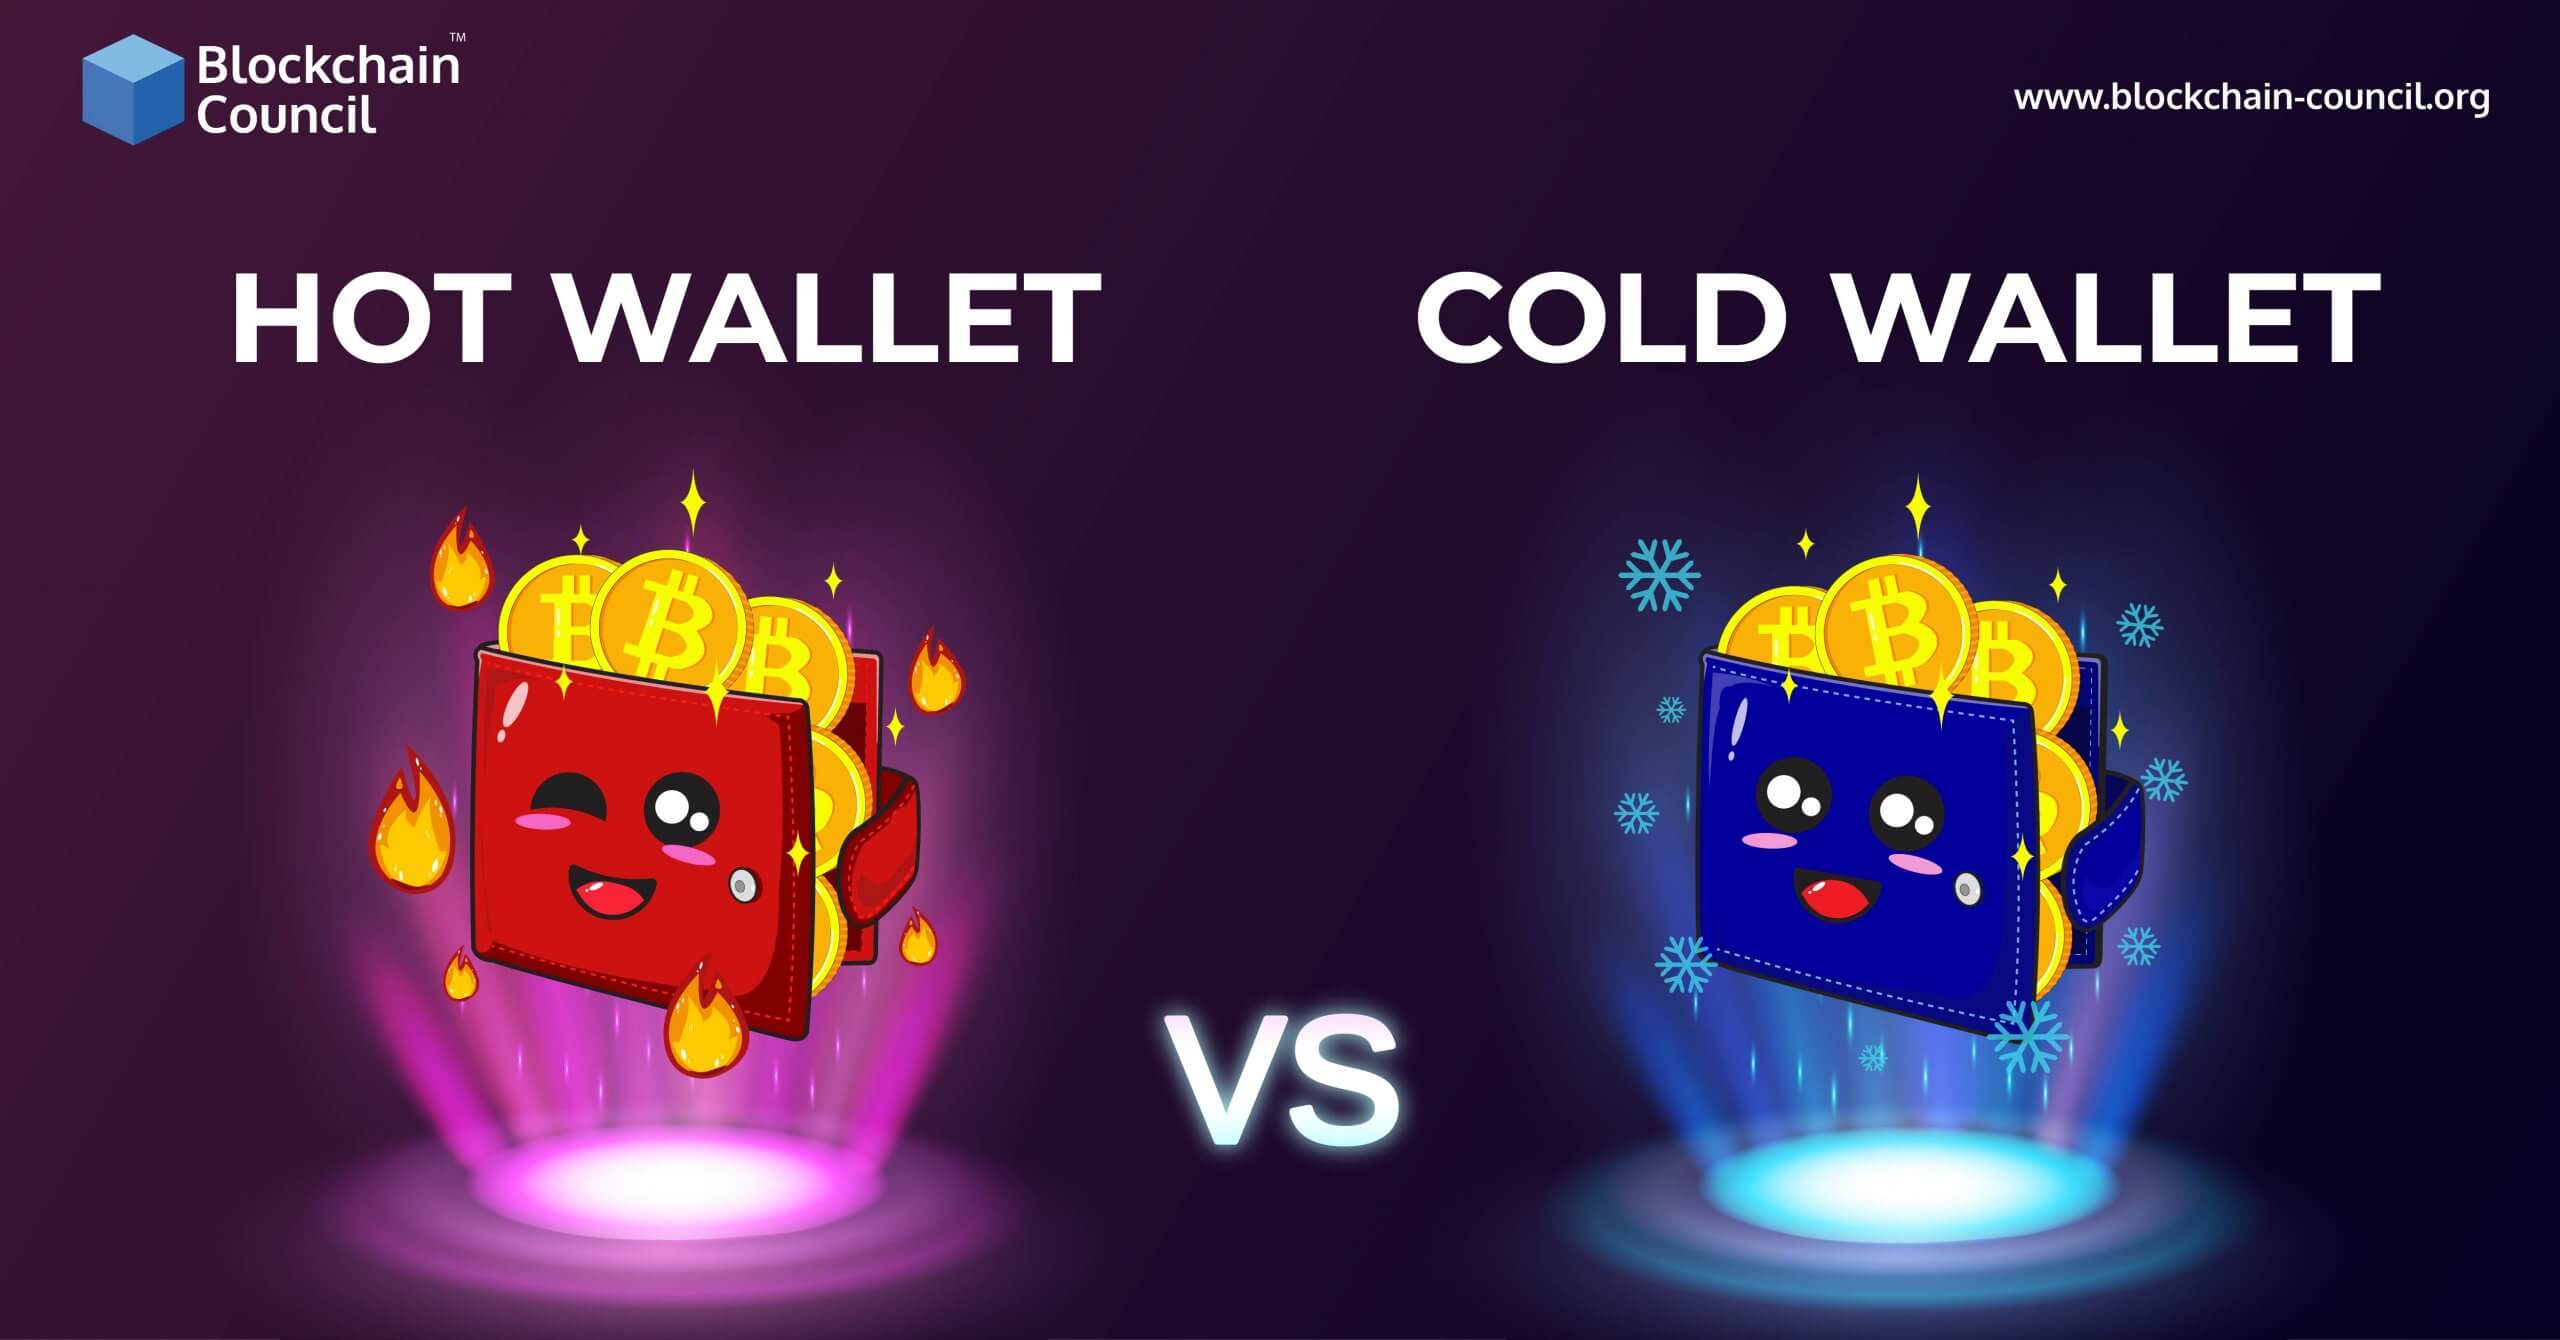 HOT WALLET VS COLD WALLET